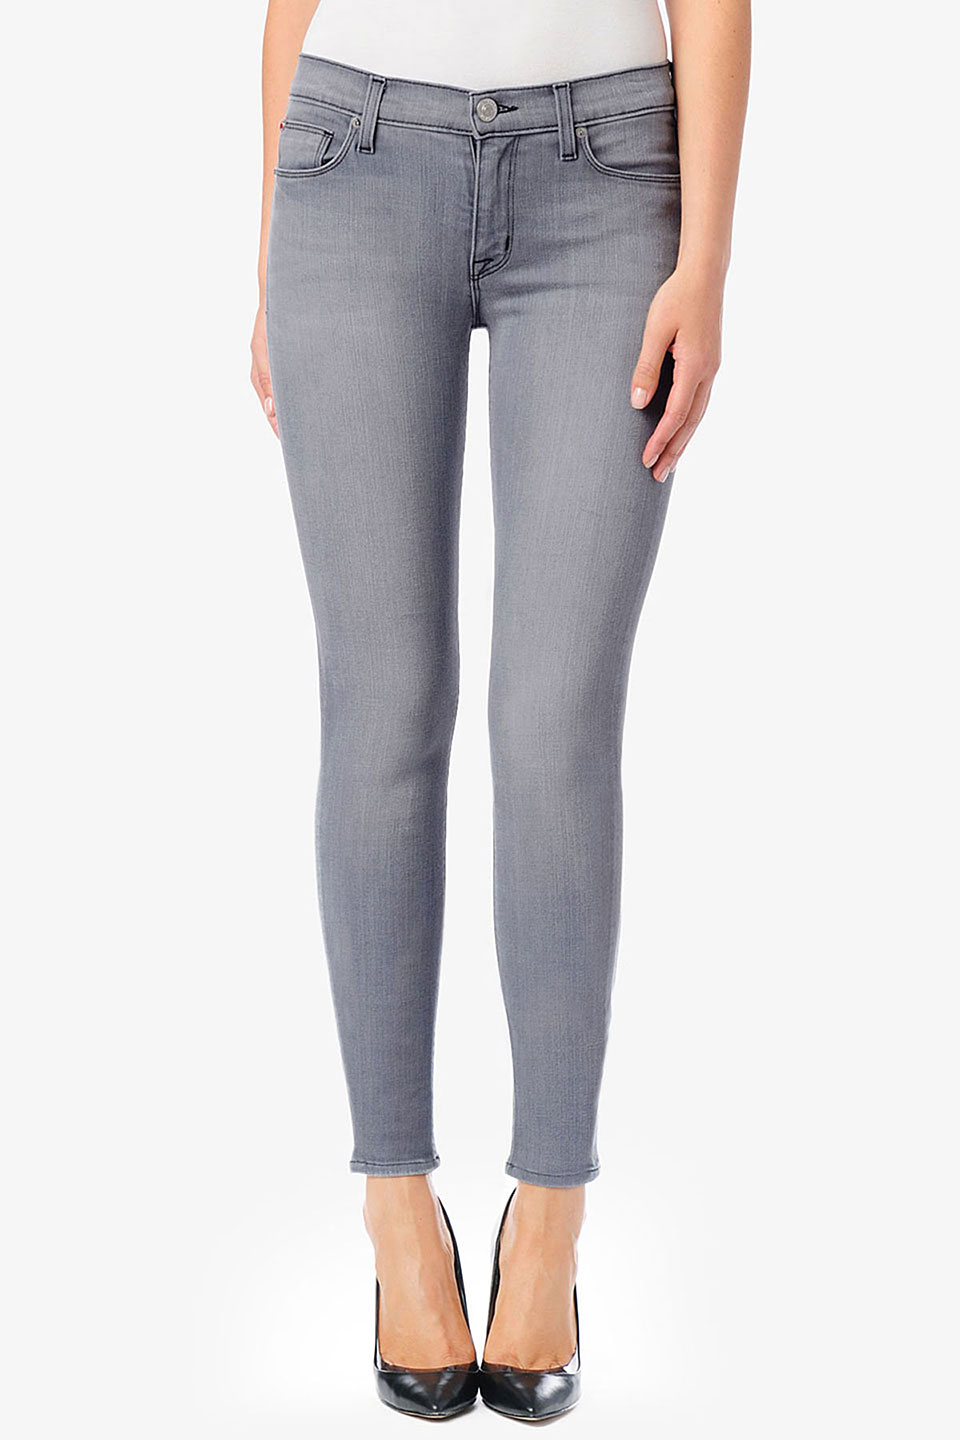 hudson gray jeans